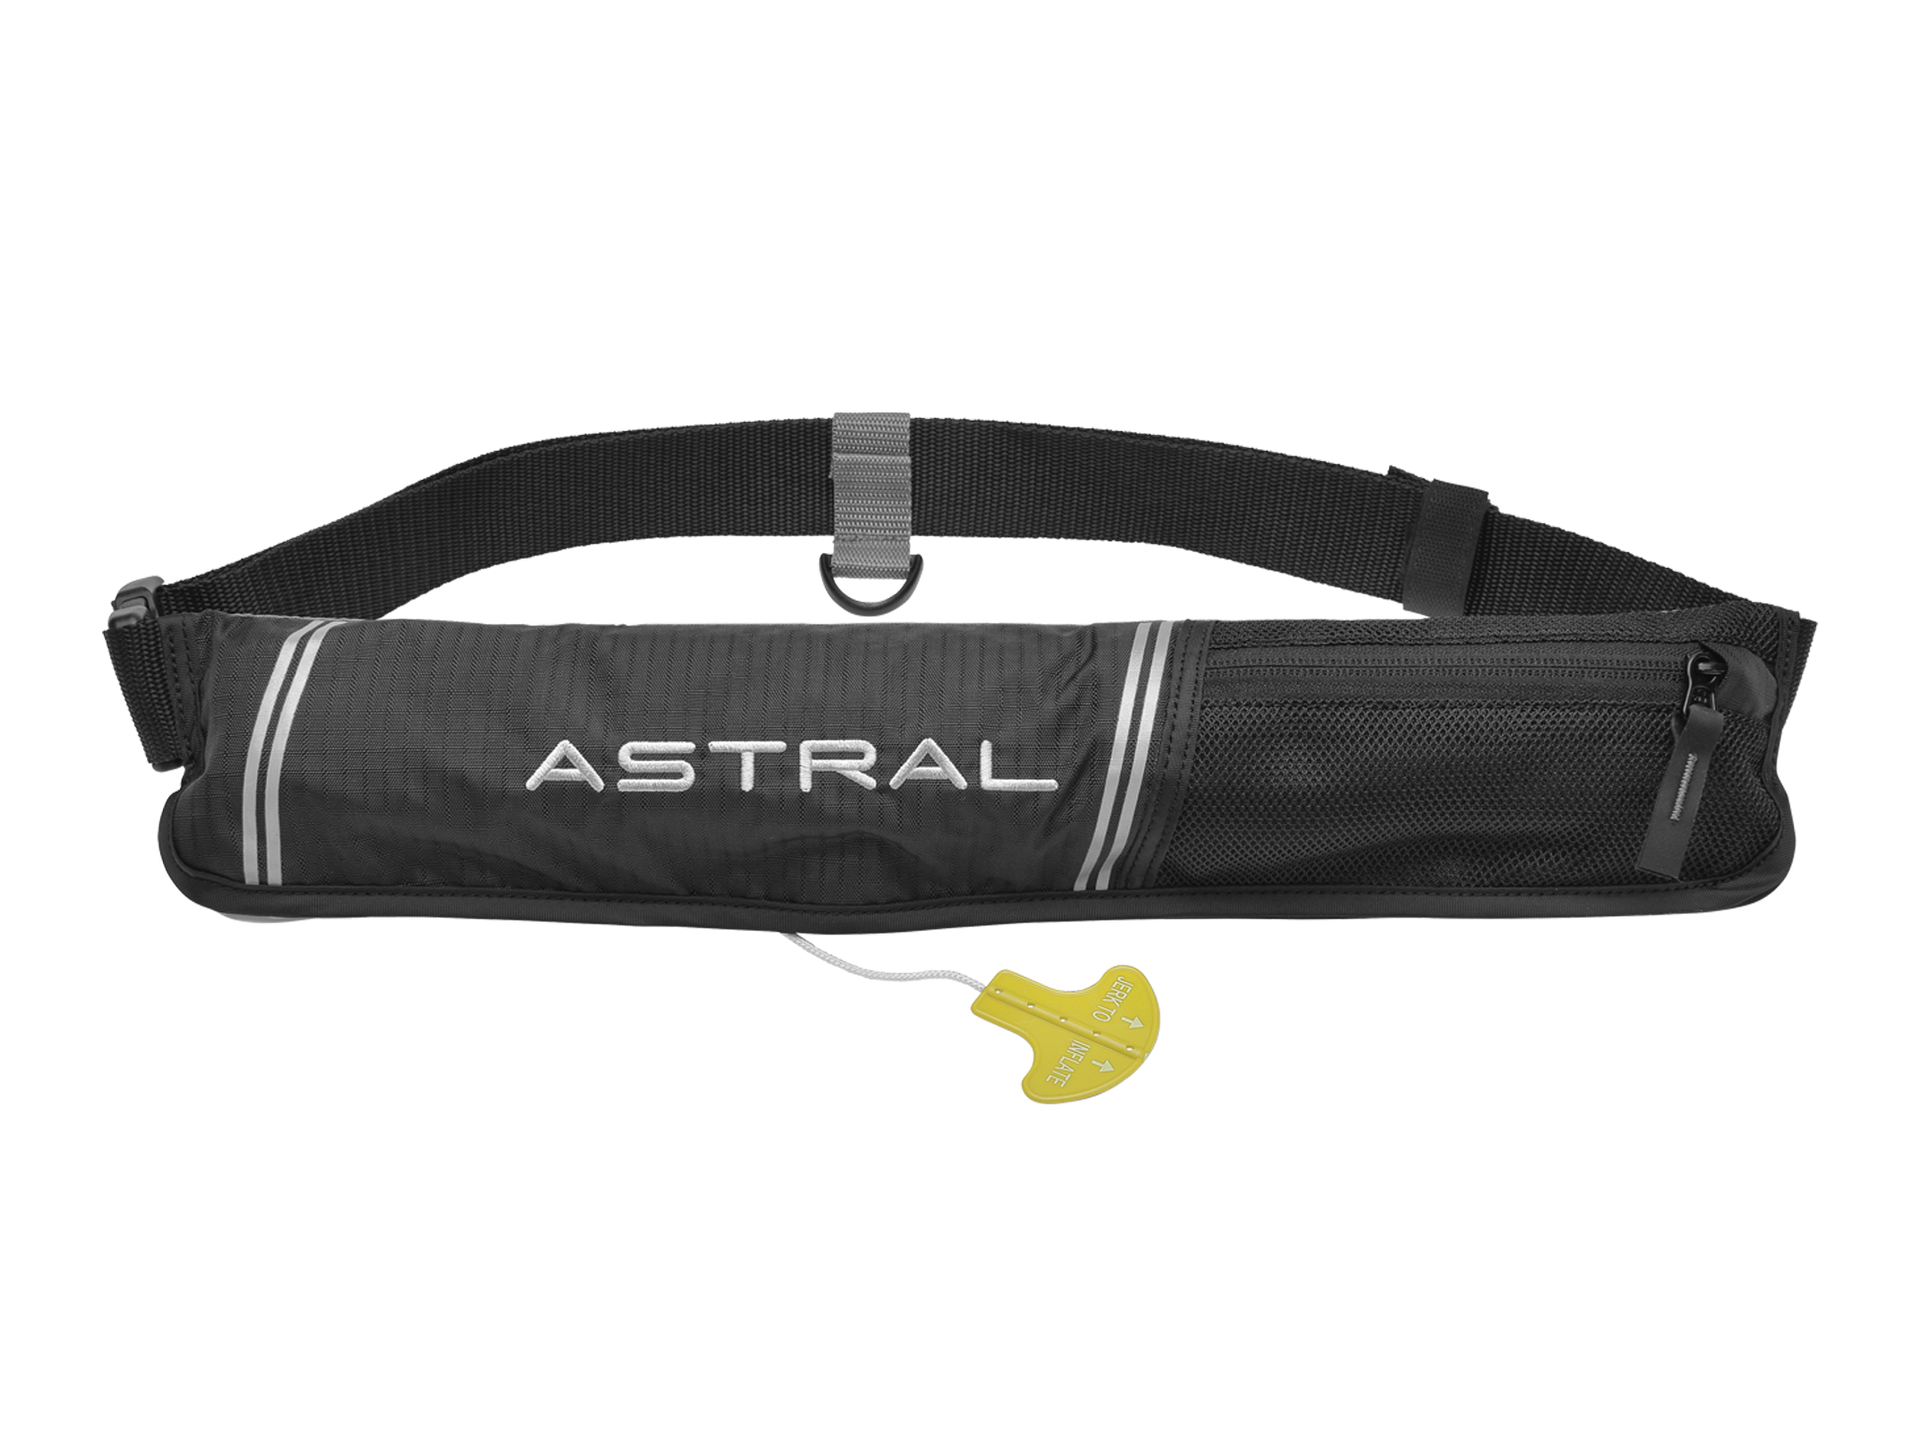 Astral Airbelt 2.0